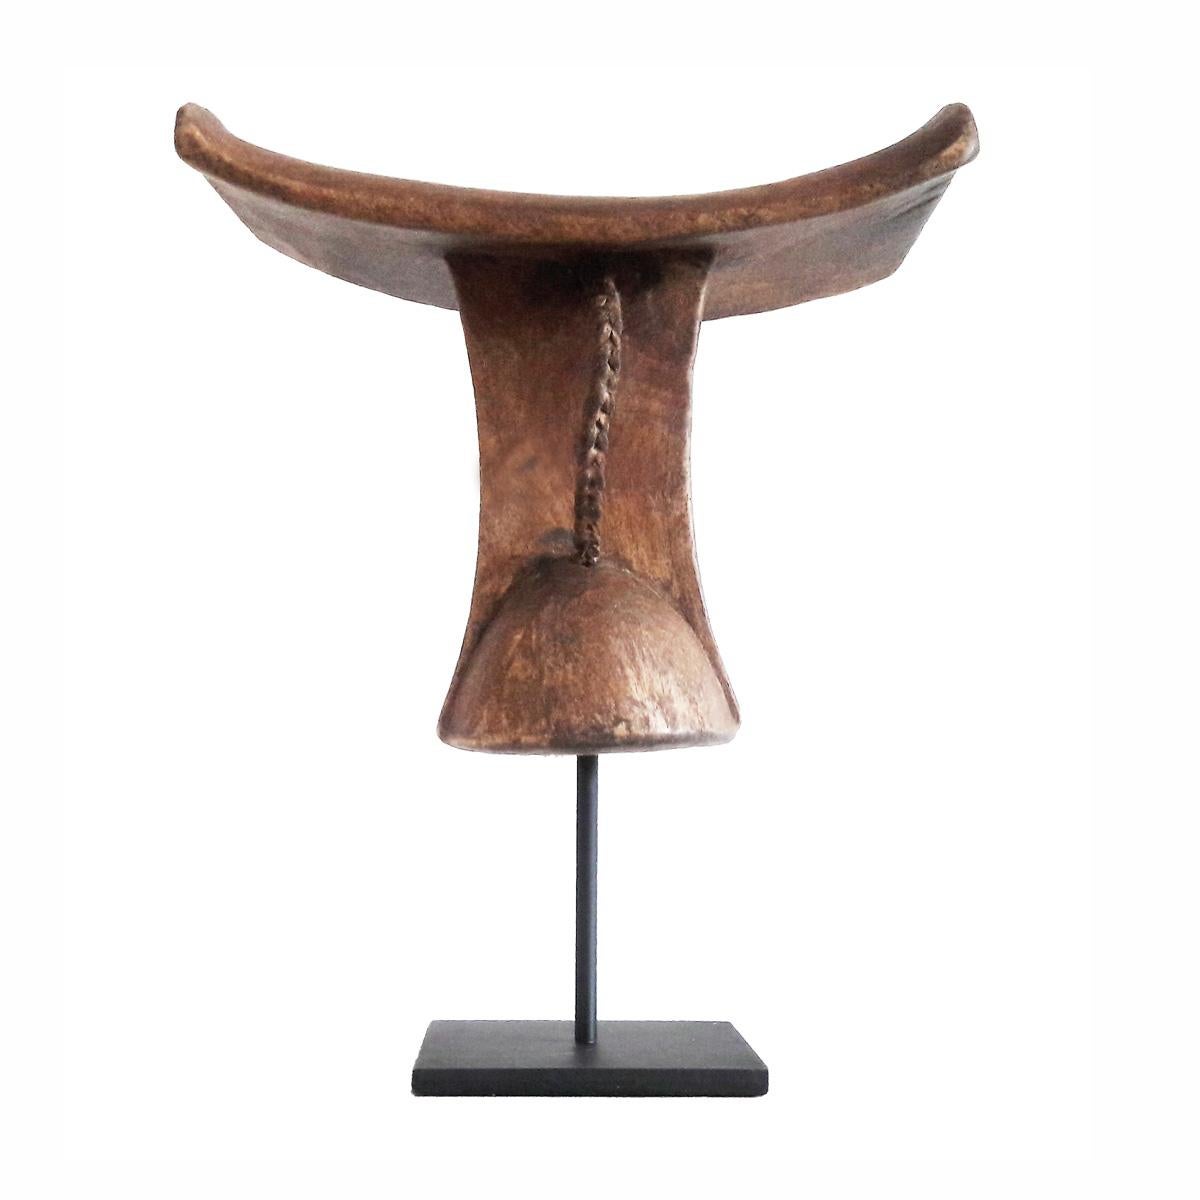 Hand-Carved Ethiopian Wood Headrest